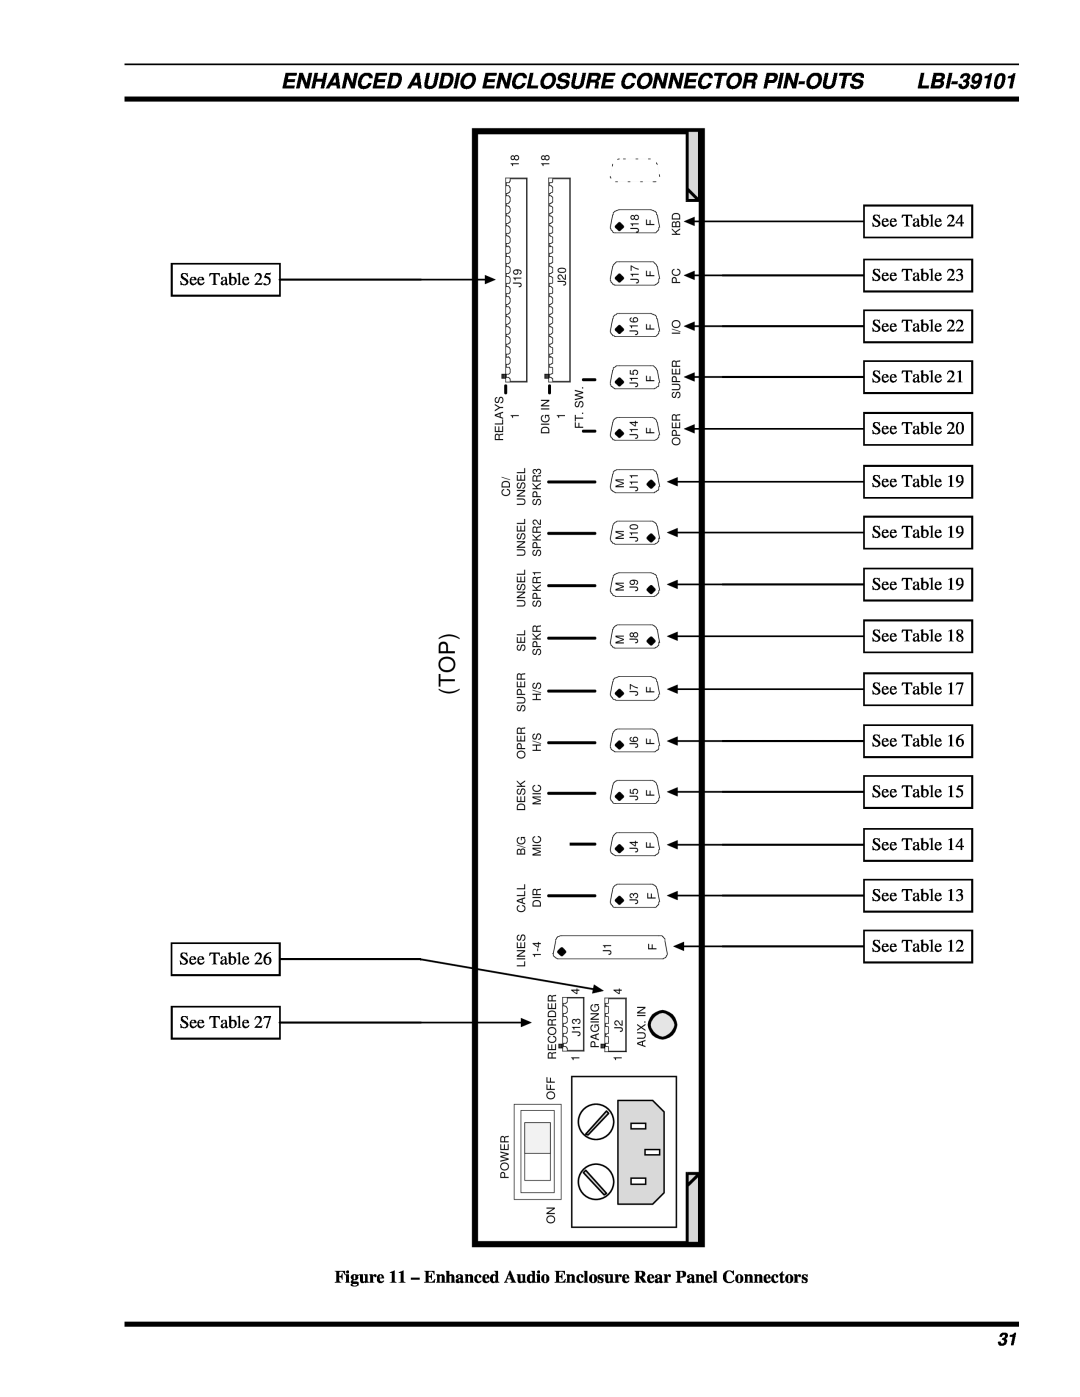 Ericsson LBI-39101A manual Enhanced Audio Enclosure Connector Pin-Outs 